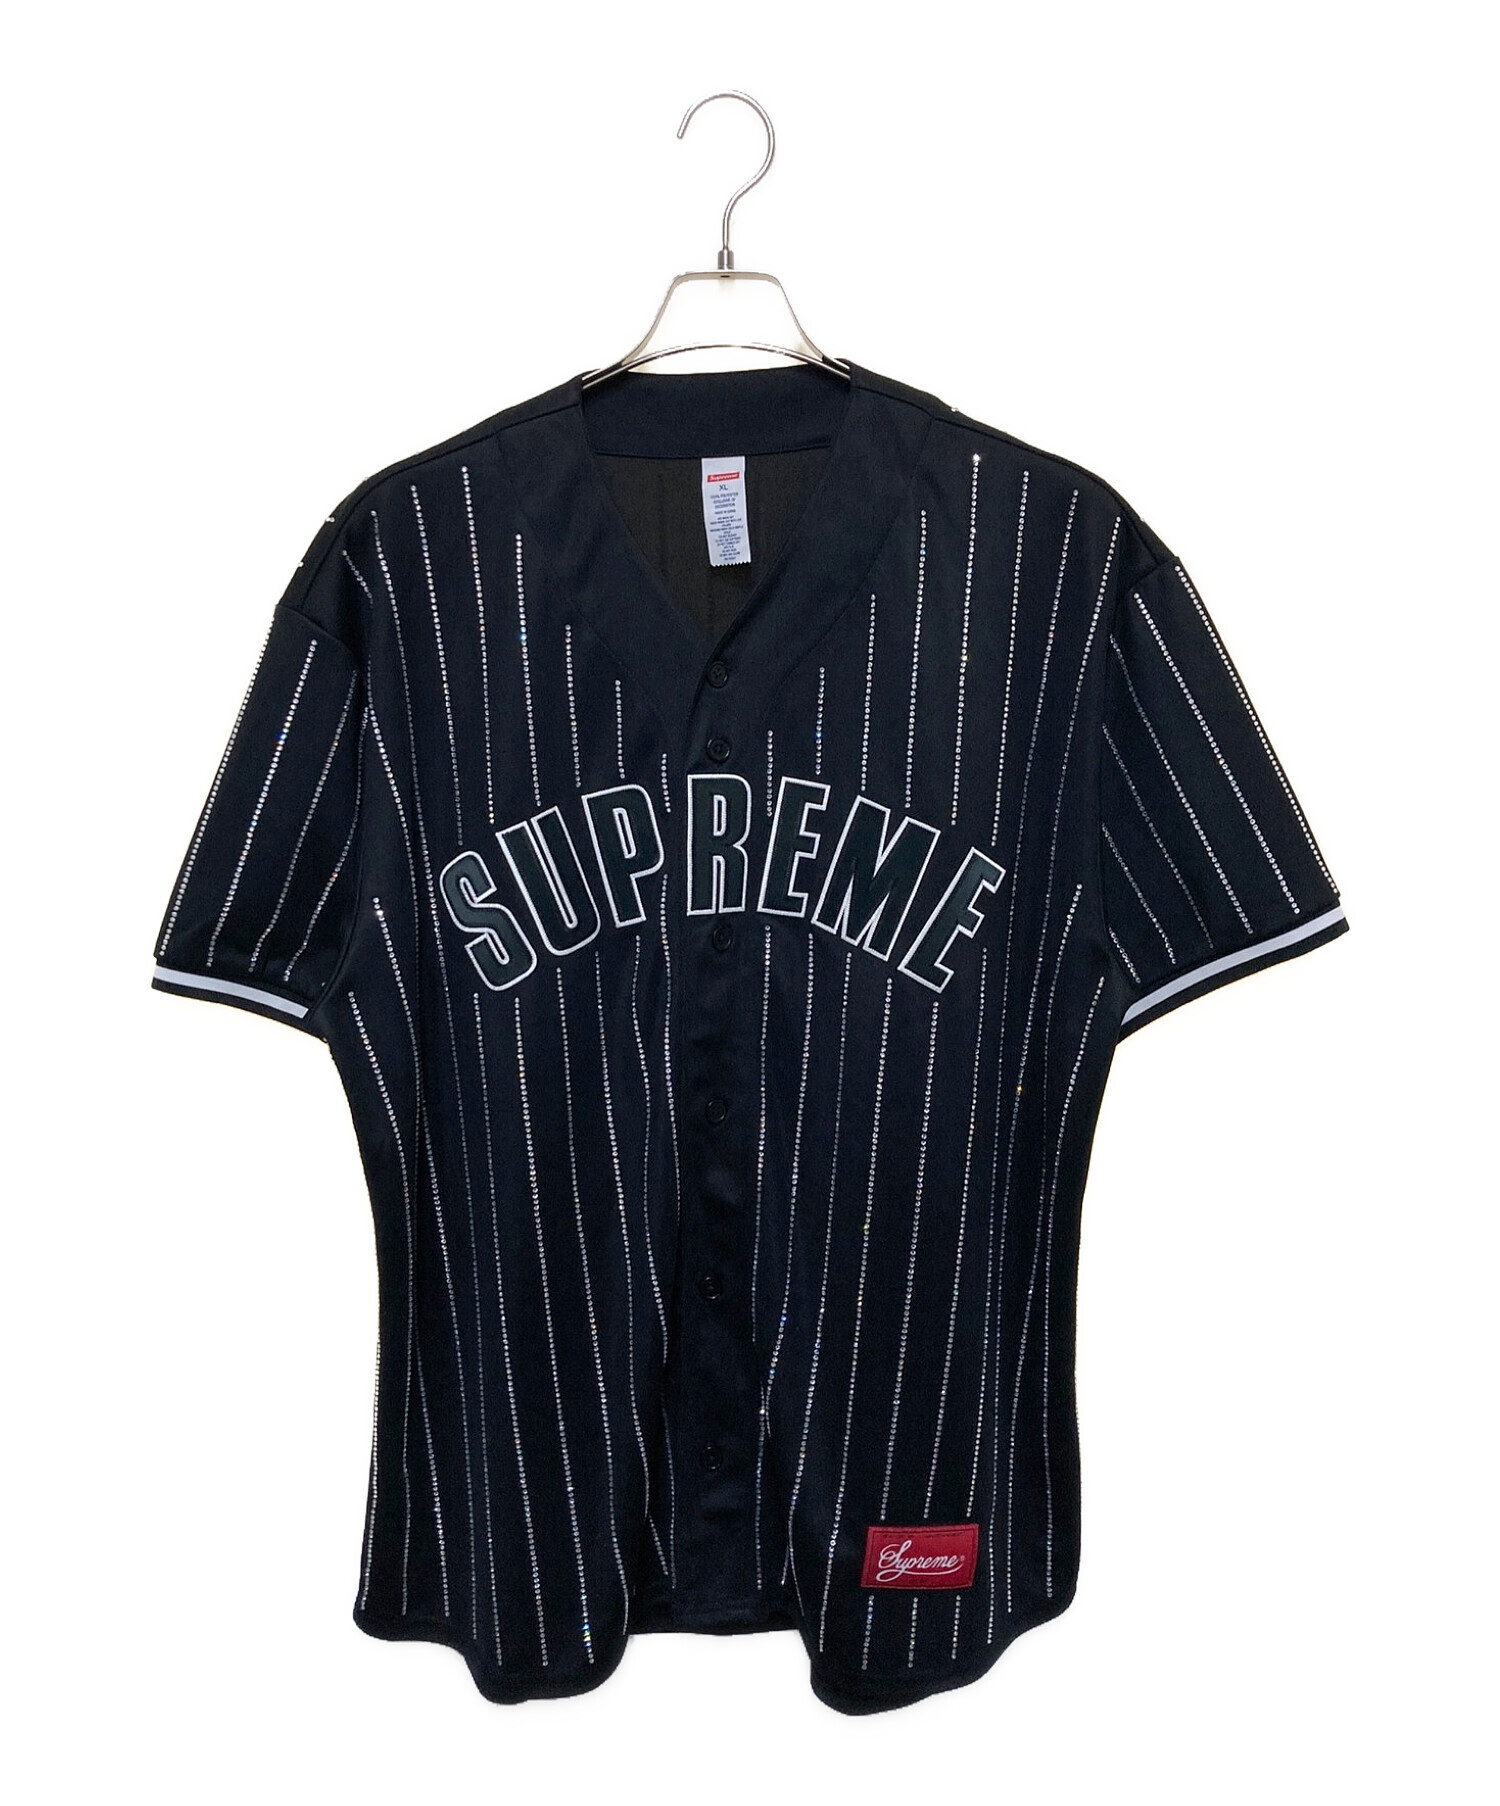 Supreme RhinestoneStripe Baseball Jerseyロープロファイル